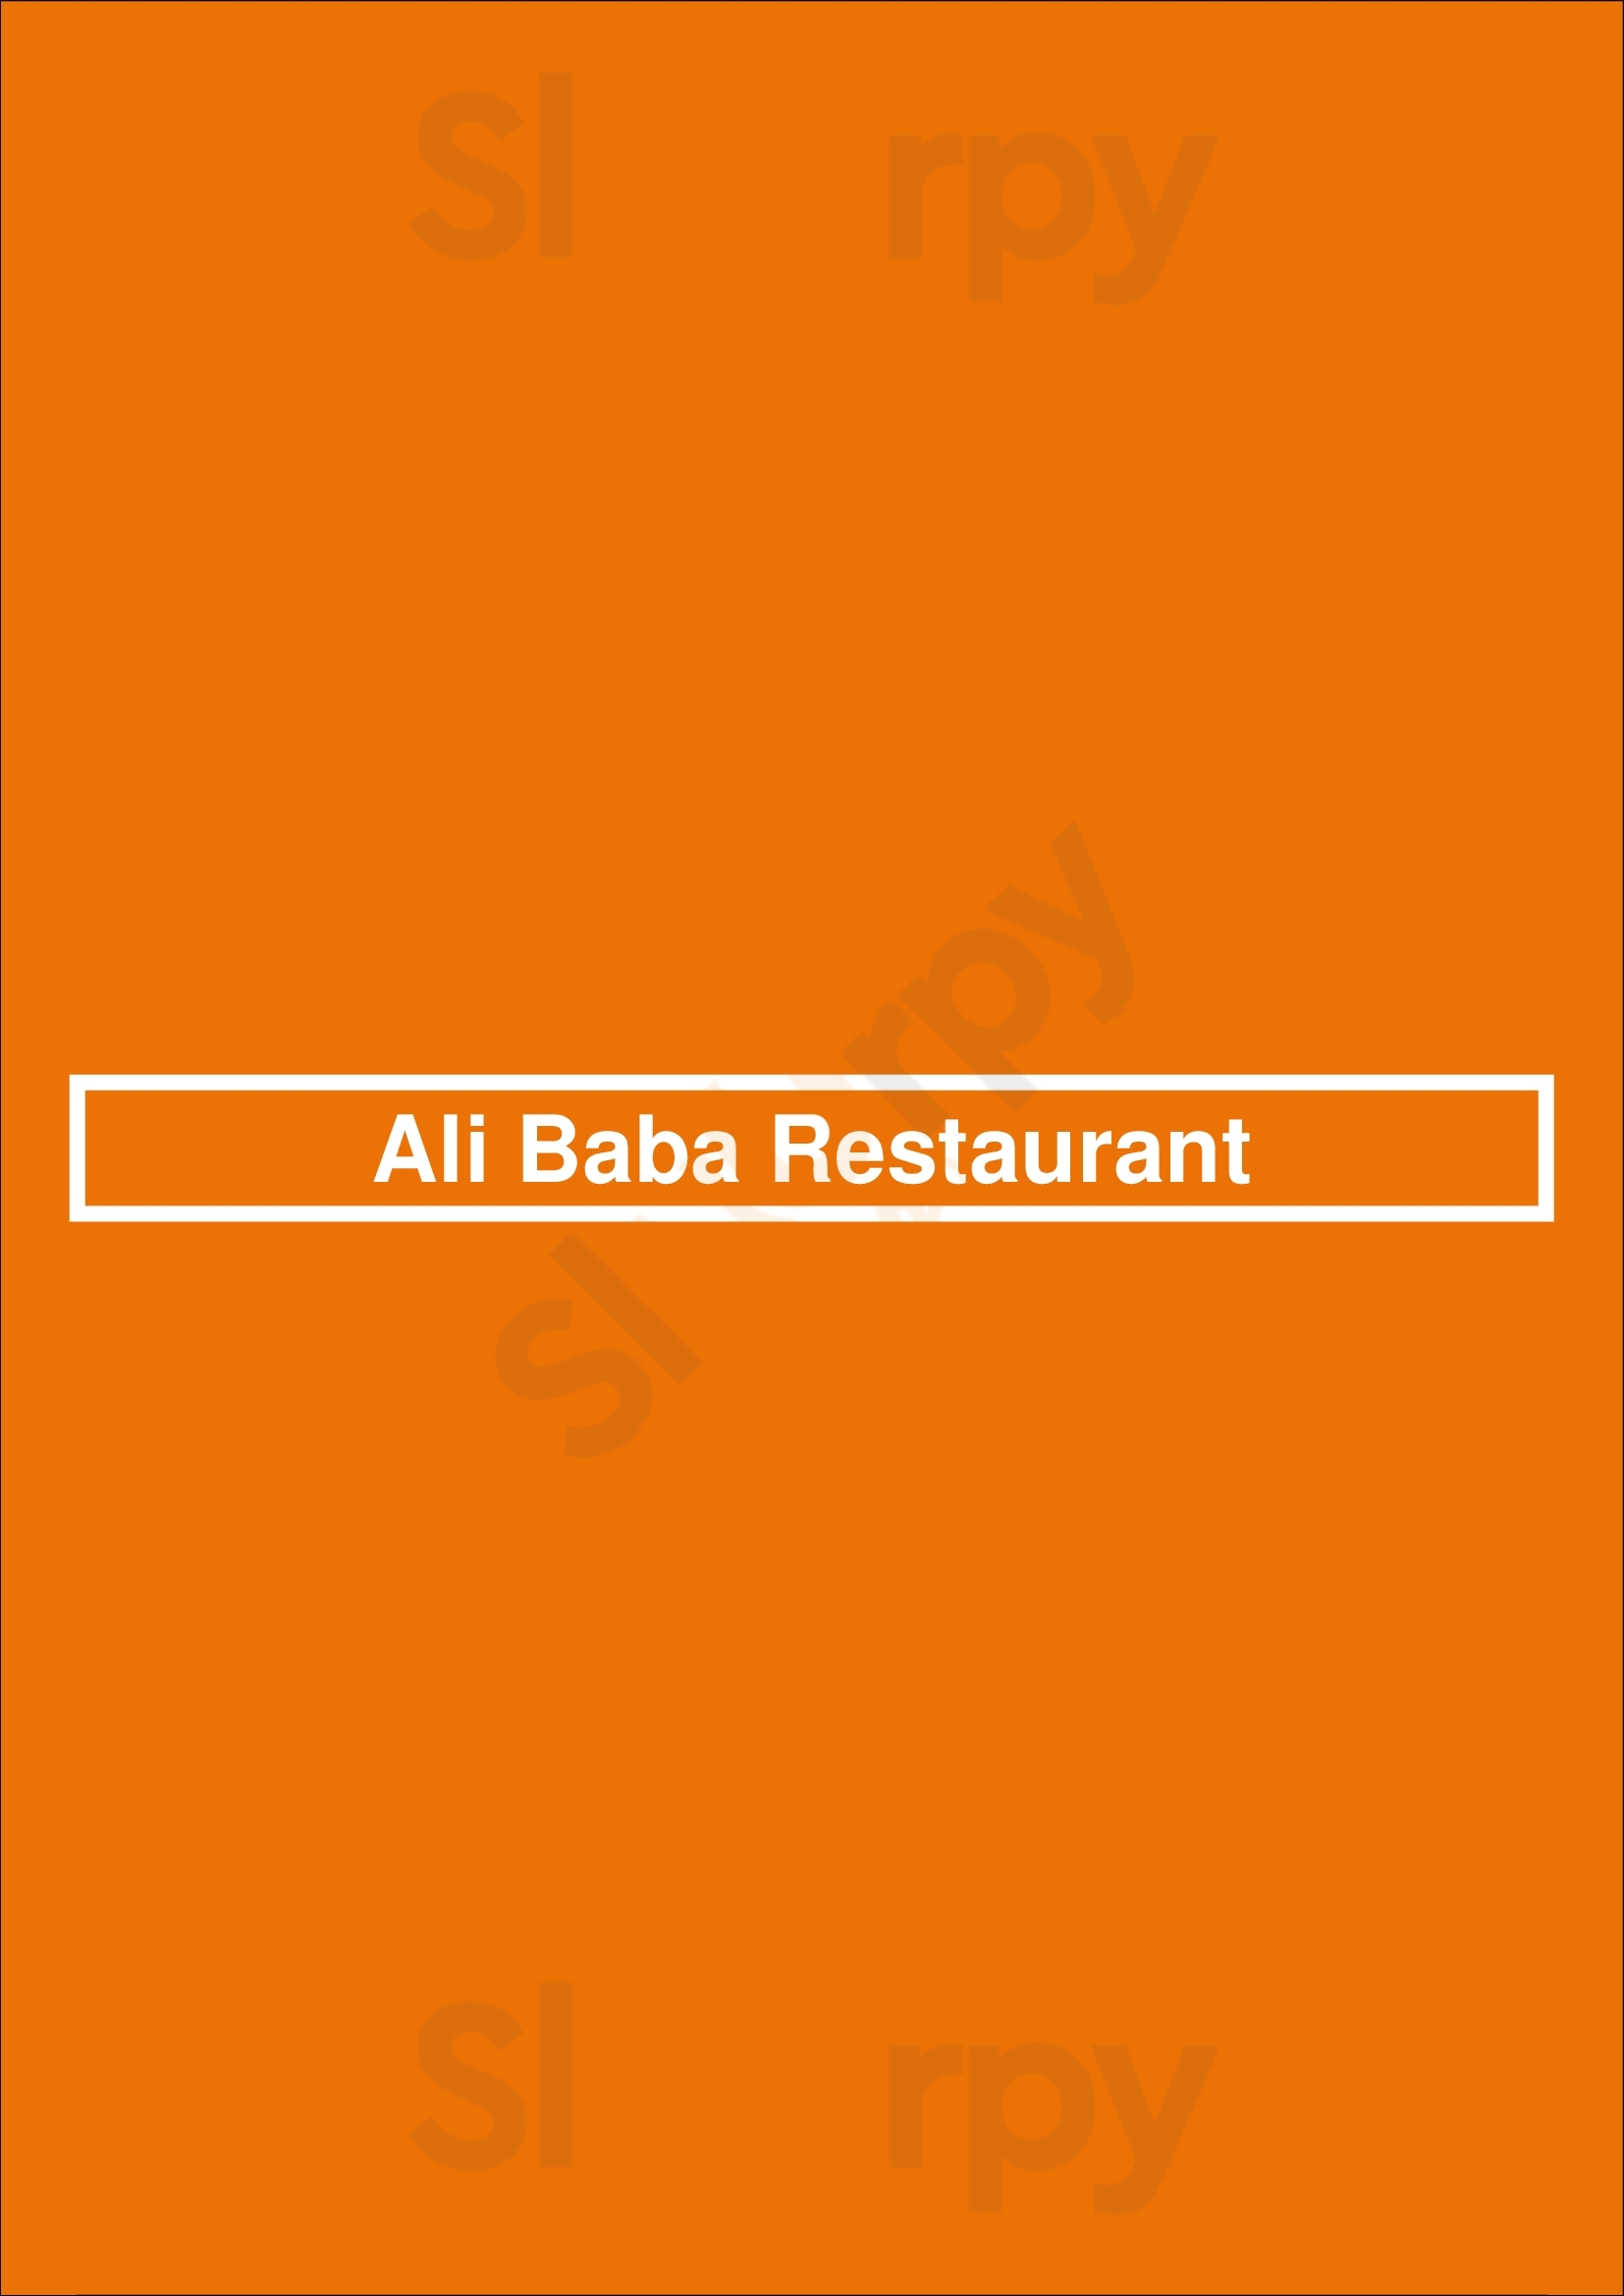 Ali Baba Restaurant Karlsruhe Menu - 1